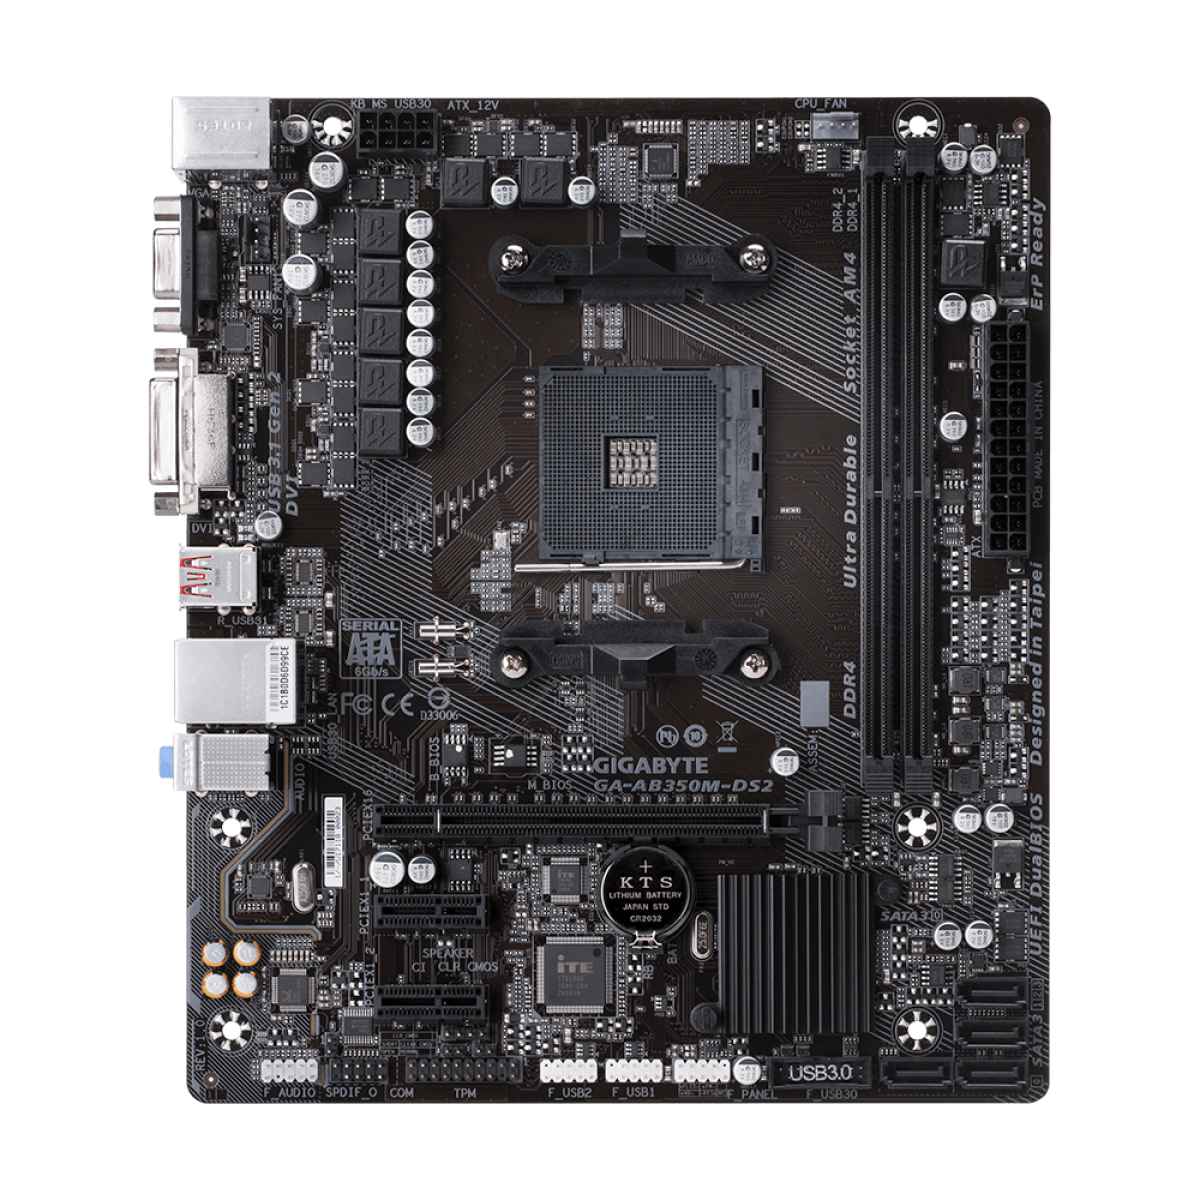 Placa Mãe Gigabyte GA-AB350M-DS2, Chipset B350, AMD AM4, mATX, DDR4